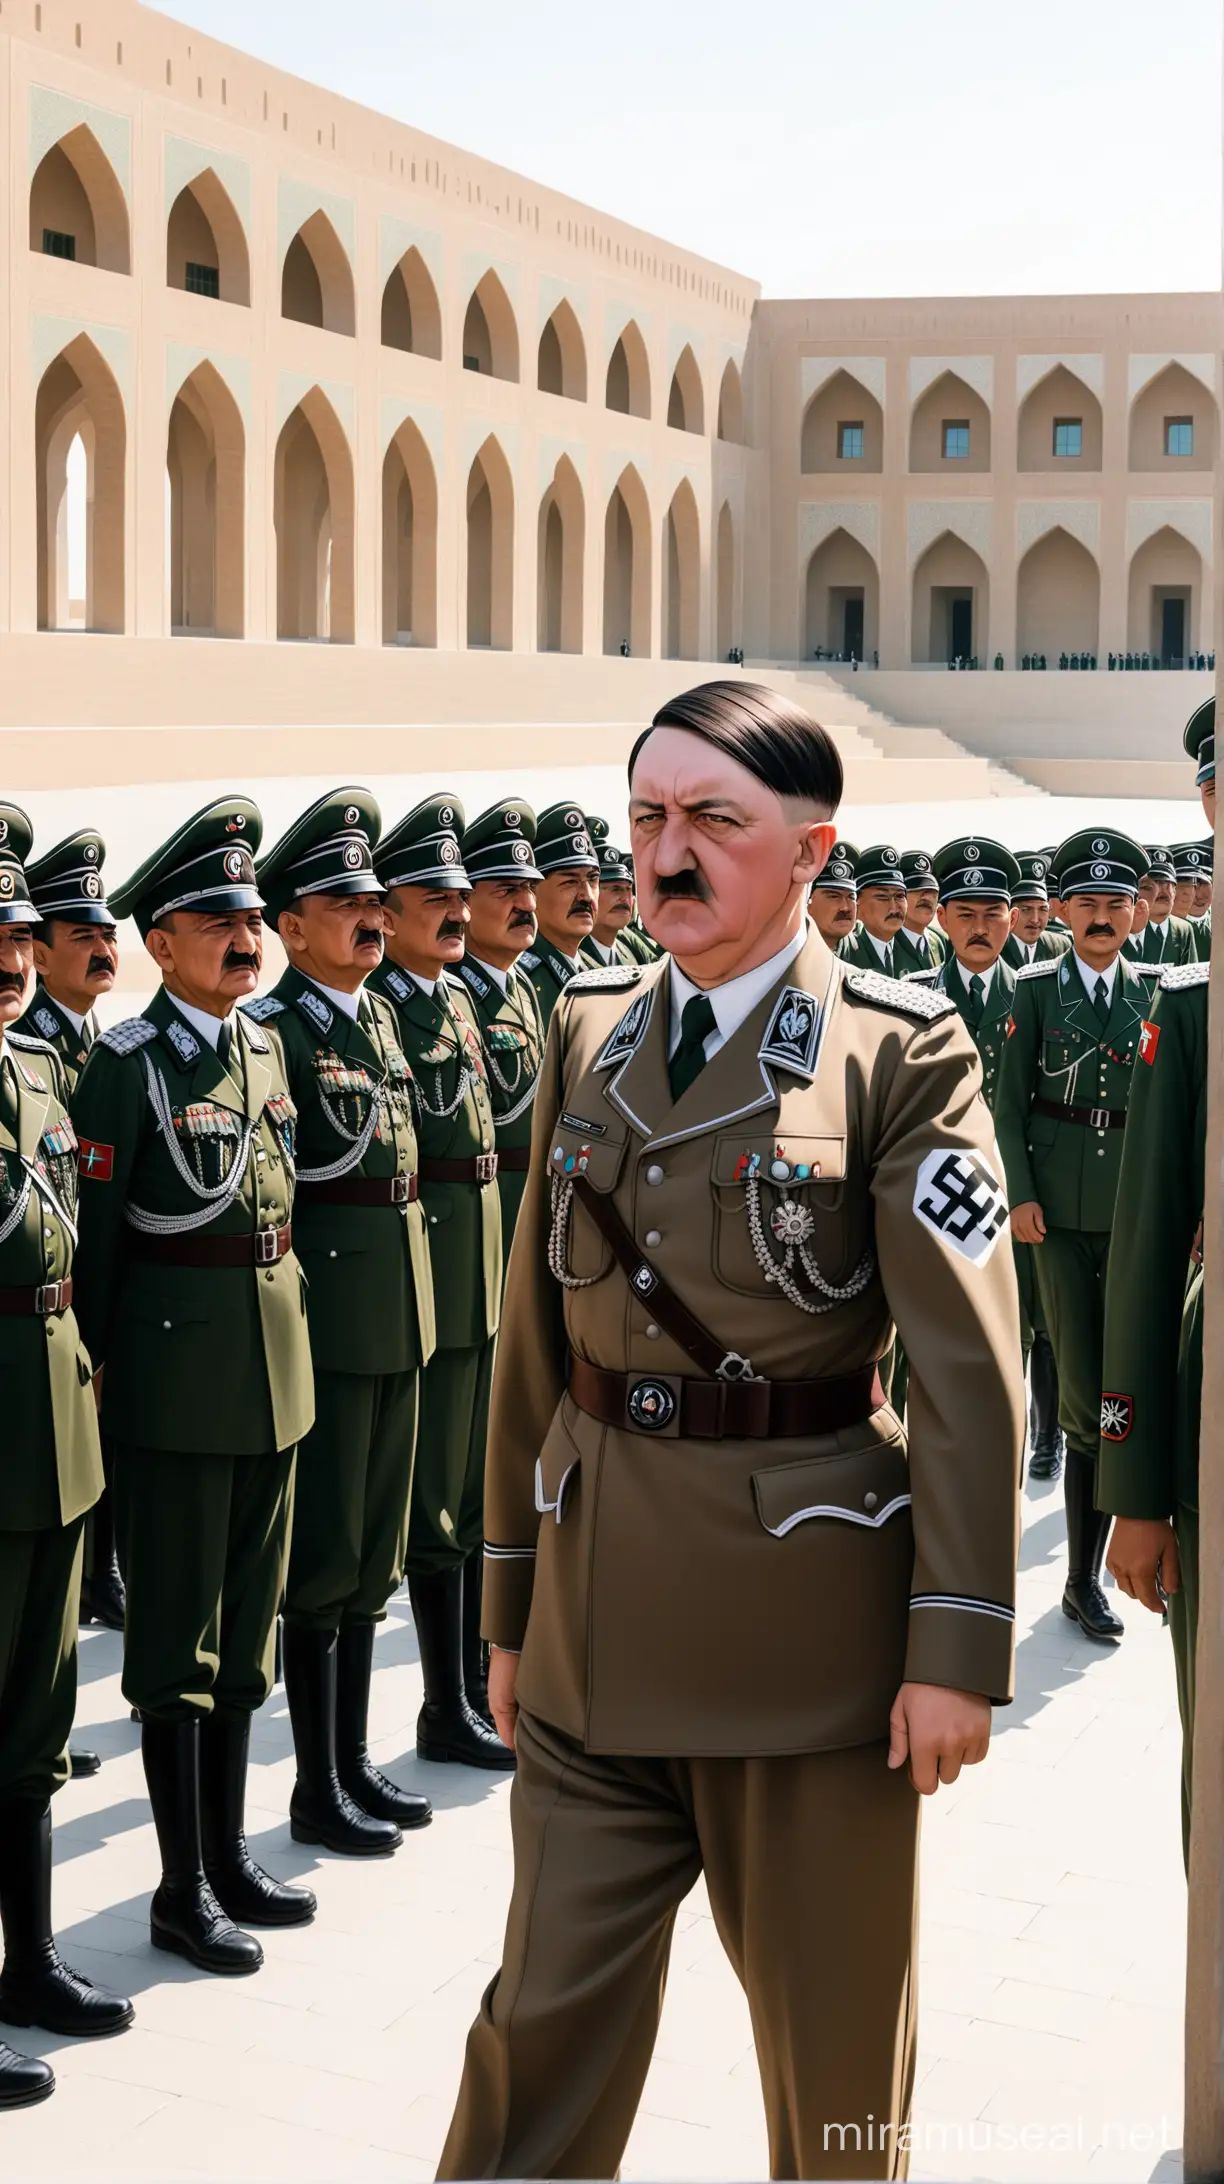 Adolf hitler in the uzbekistan 